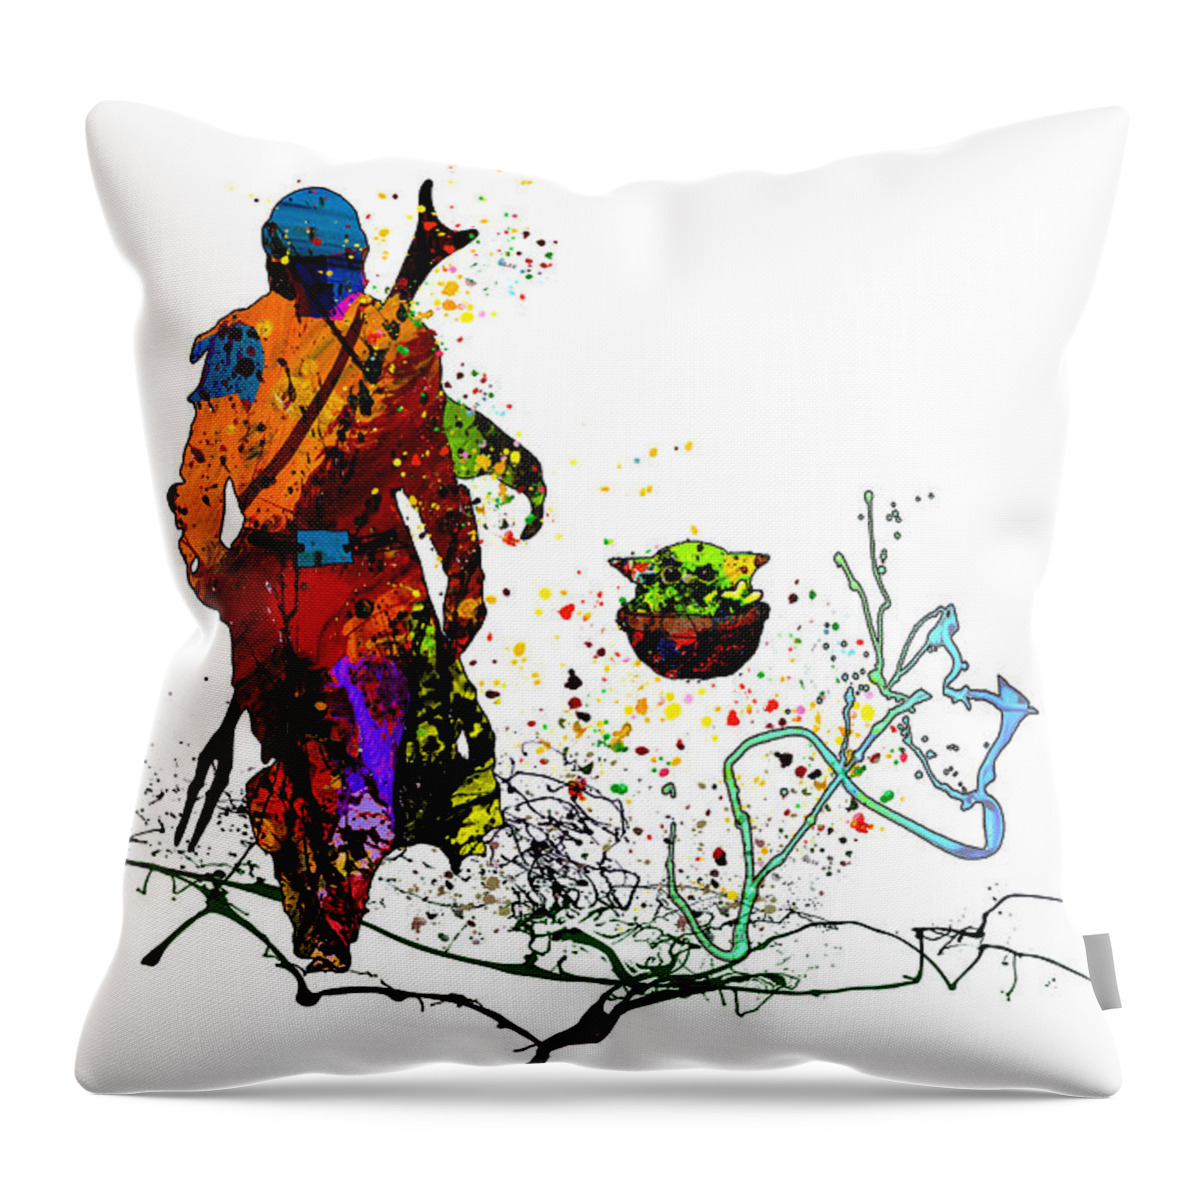 Watercolour Throw Pillow featuring the mixed media The Mandalorian 01 by Miki De Goodaboom